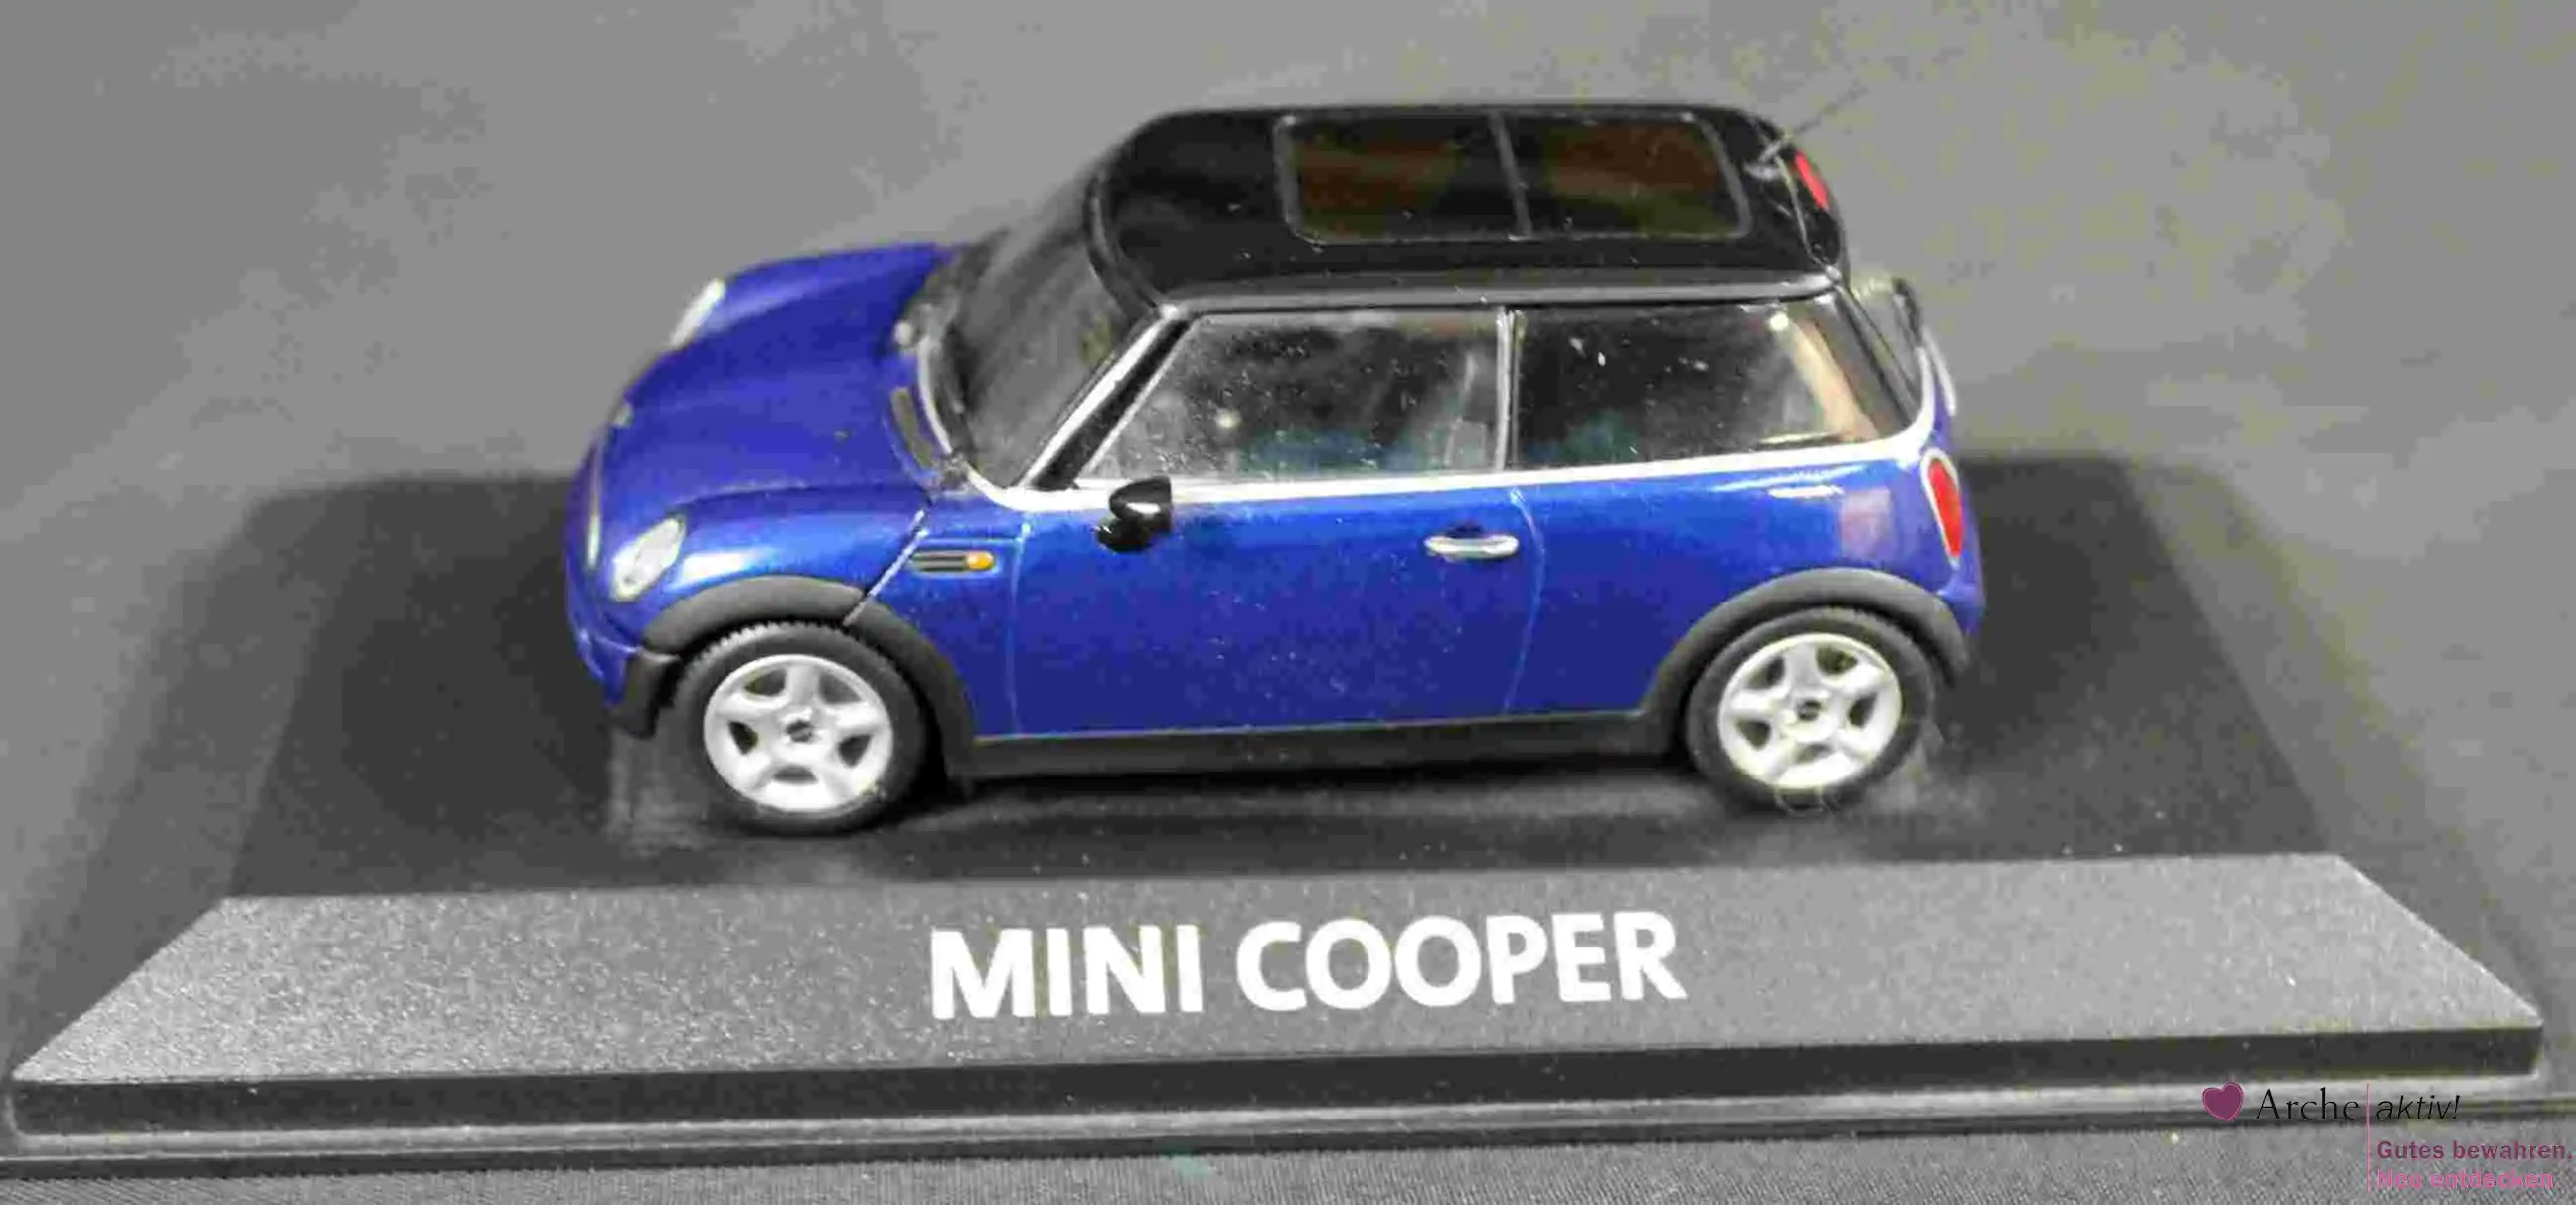 Modellauto Mini Cooper - Minichamps - Maßstab 1:43 - Top Zustand - in original Plexiglaskasten 